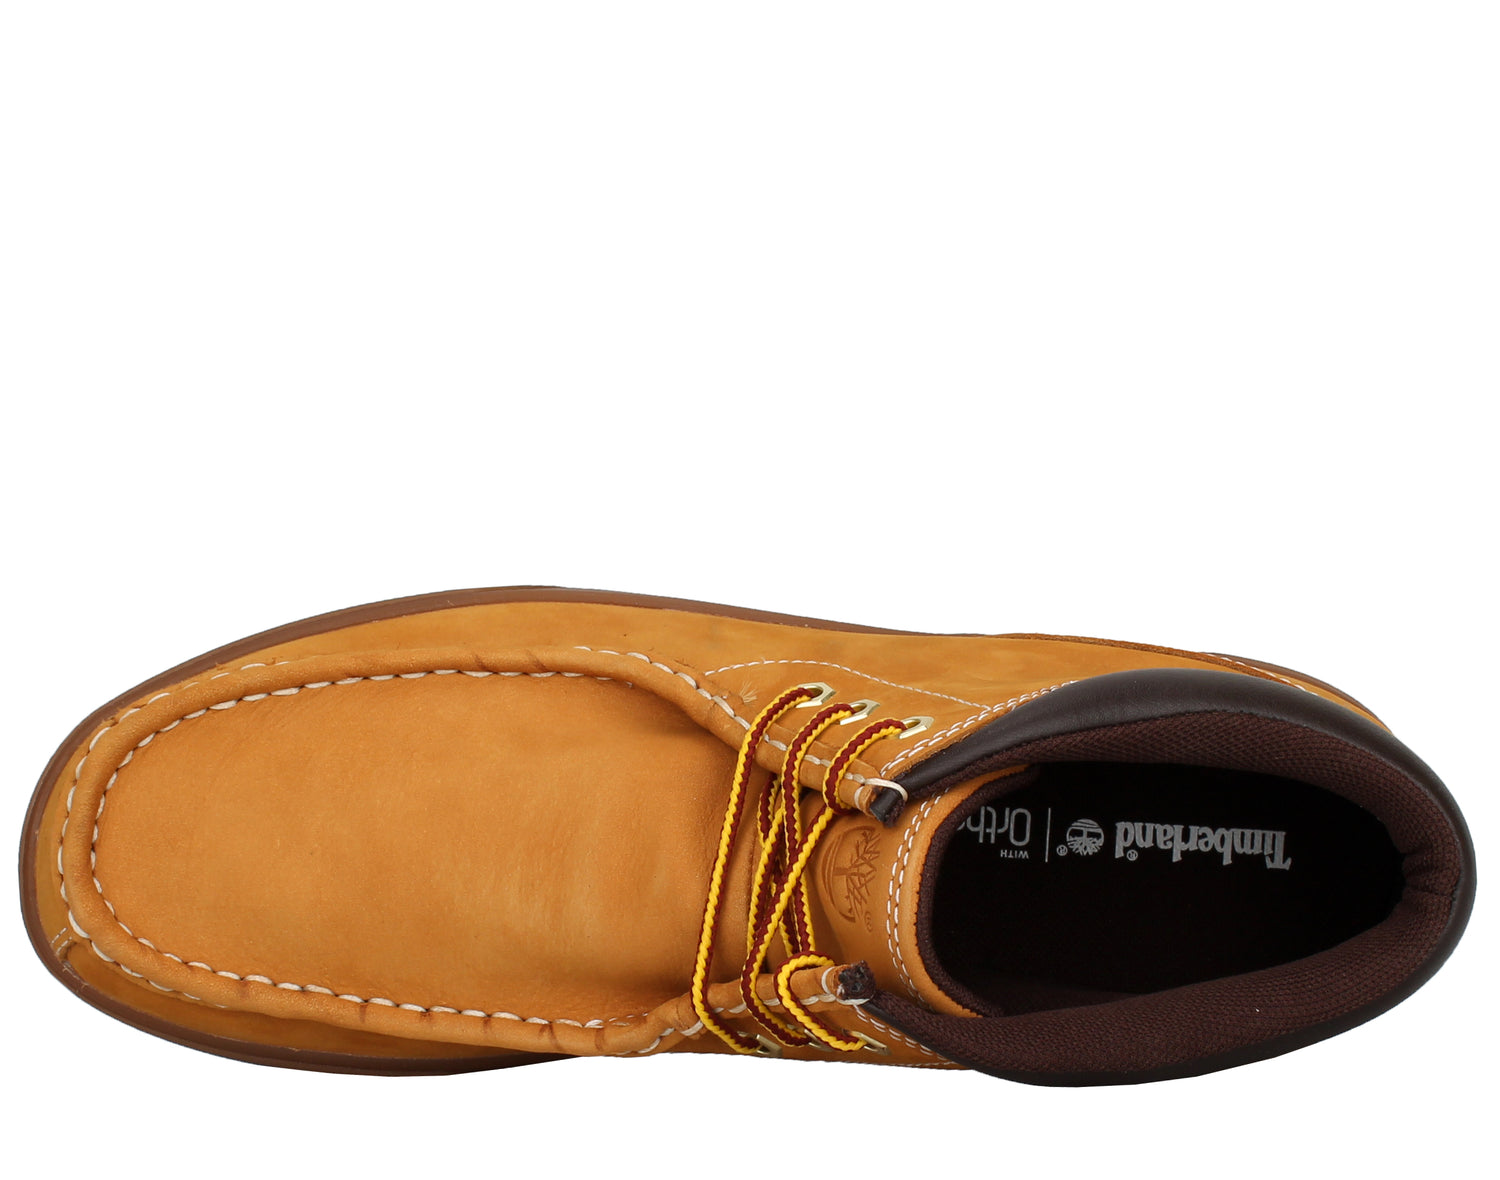 Timberland Groverton Moc Toe Chukka Men's Casual Shoes